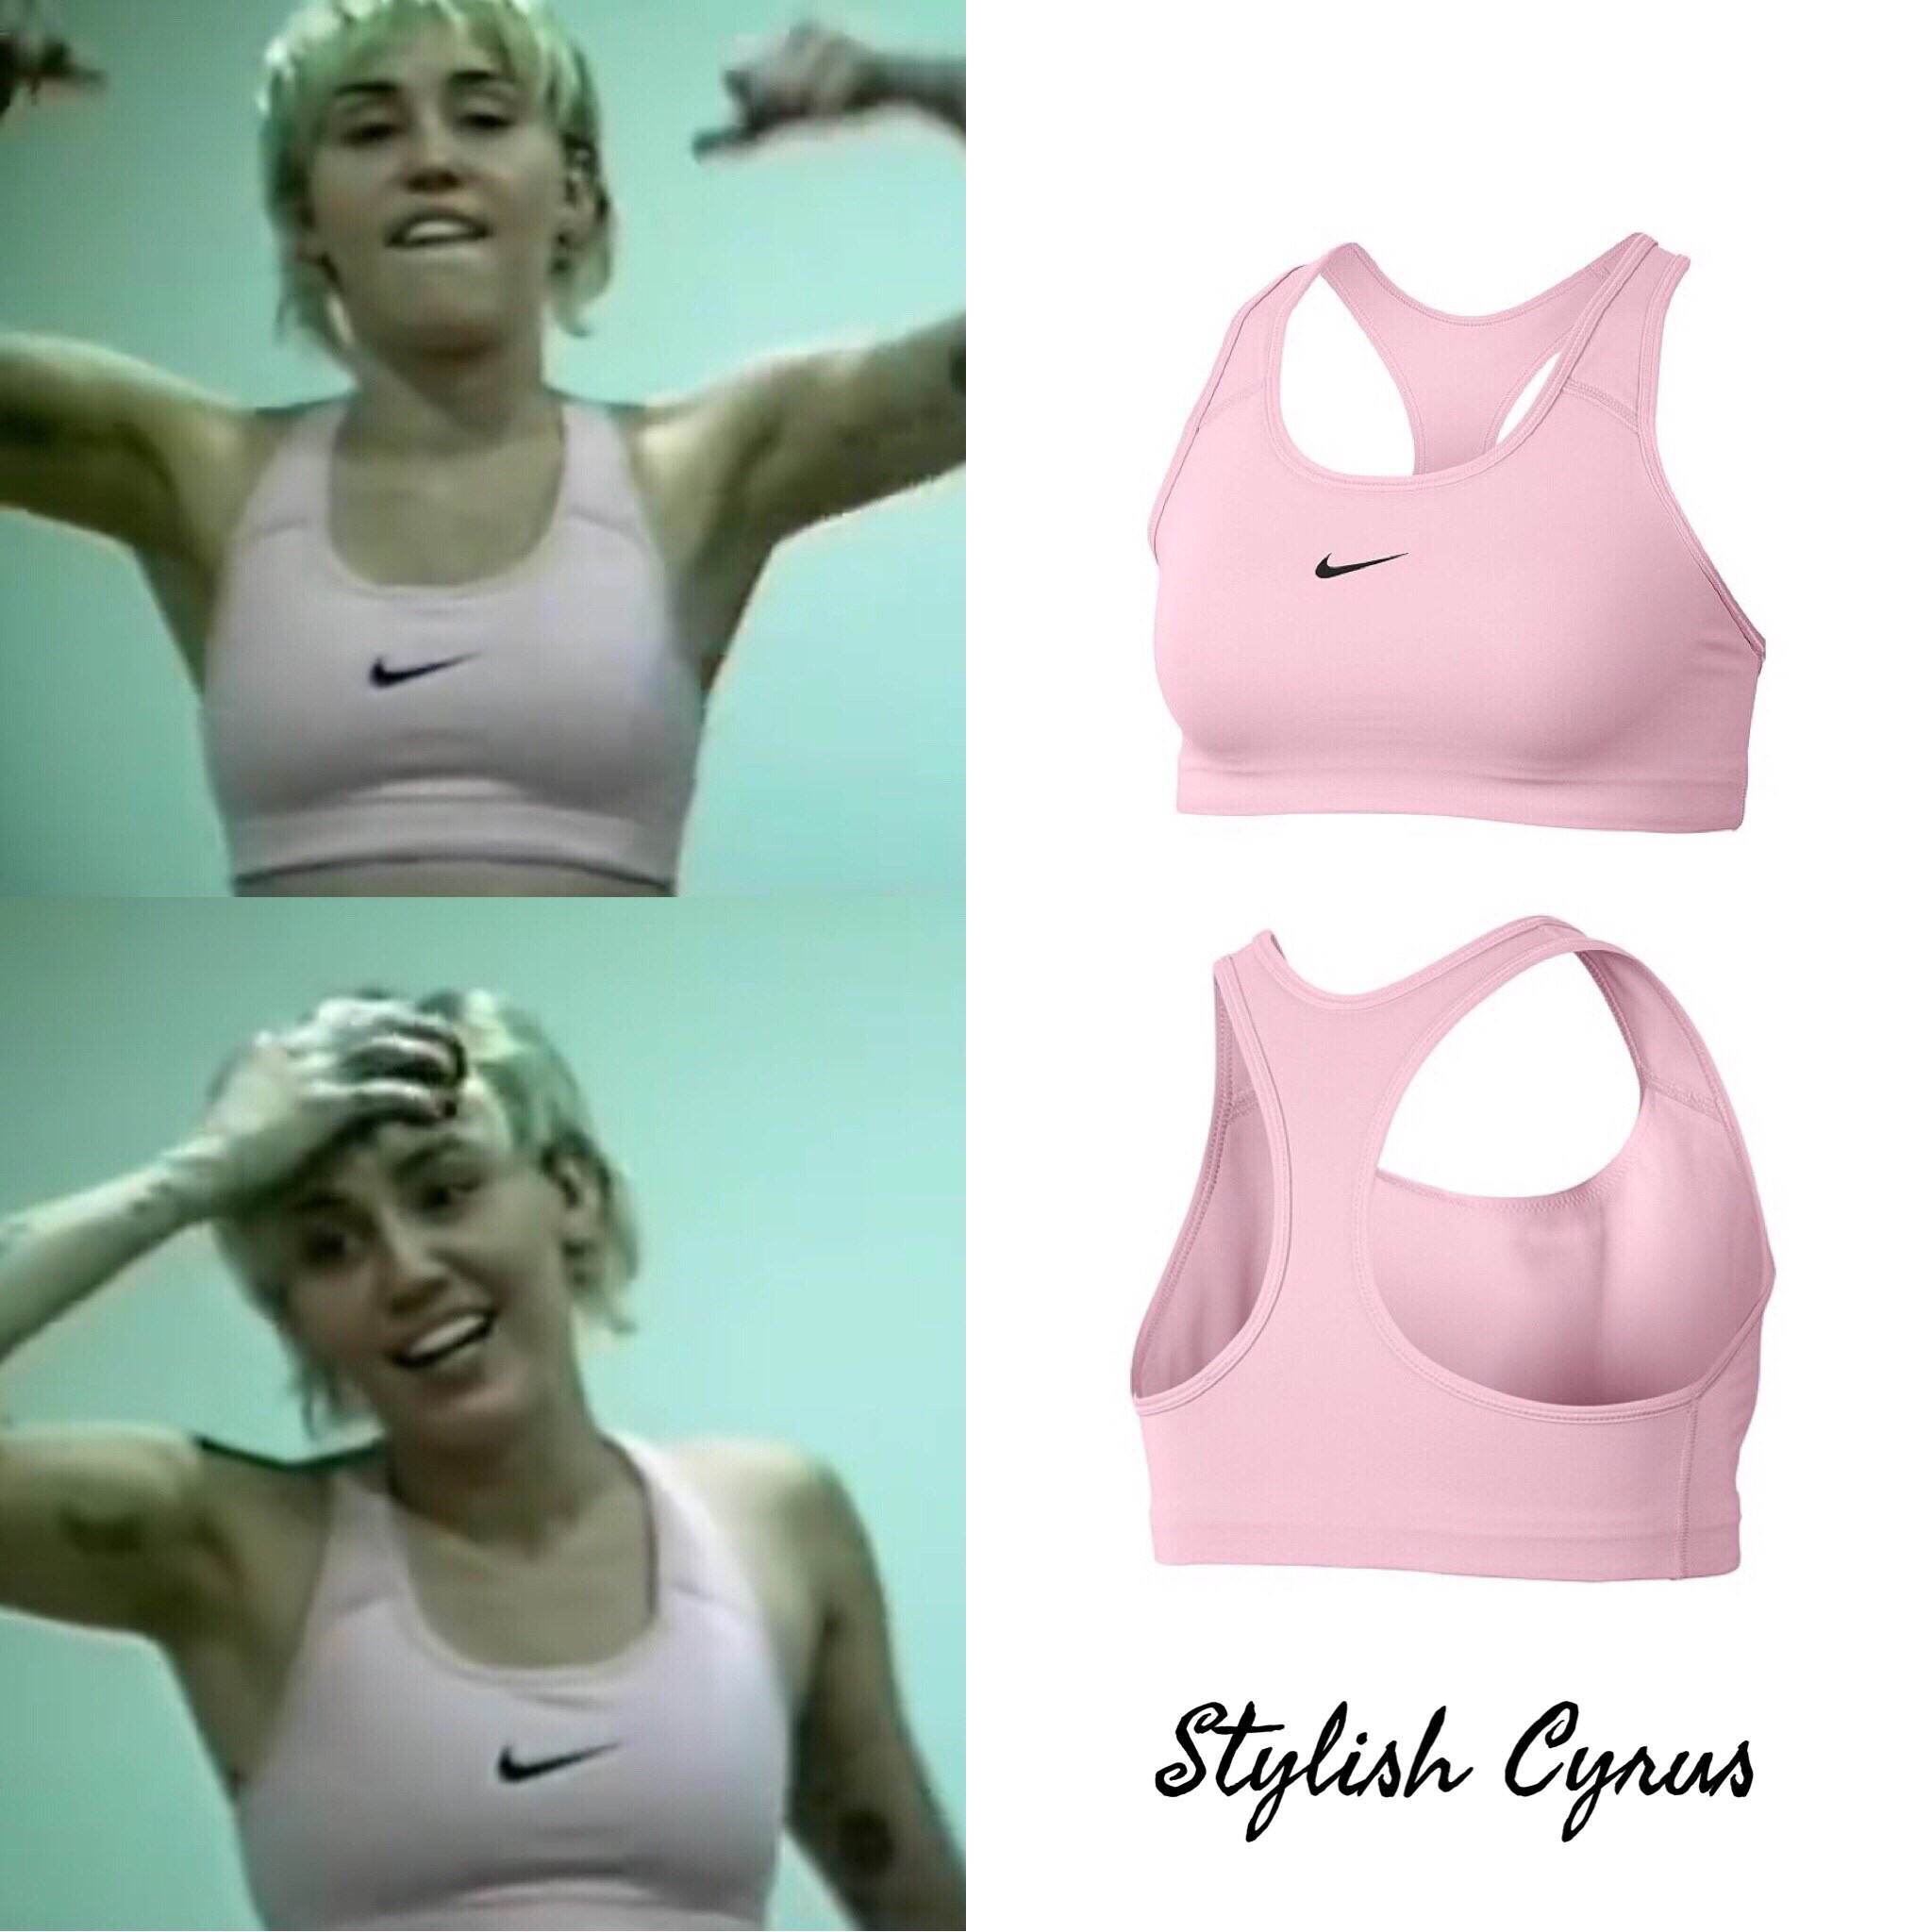 Miley Cyrus Fashion on X: .@mileycyrus wears a light pink swoosh